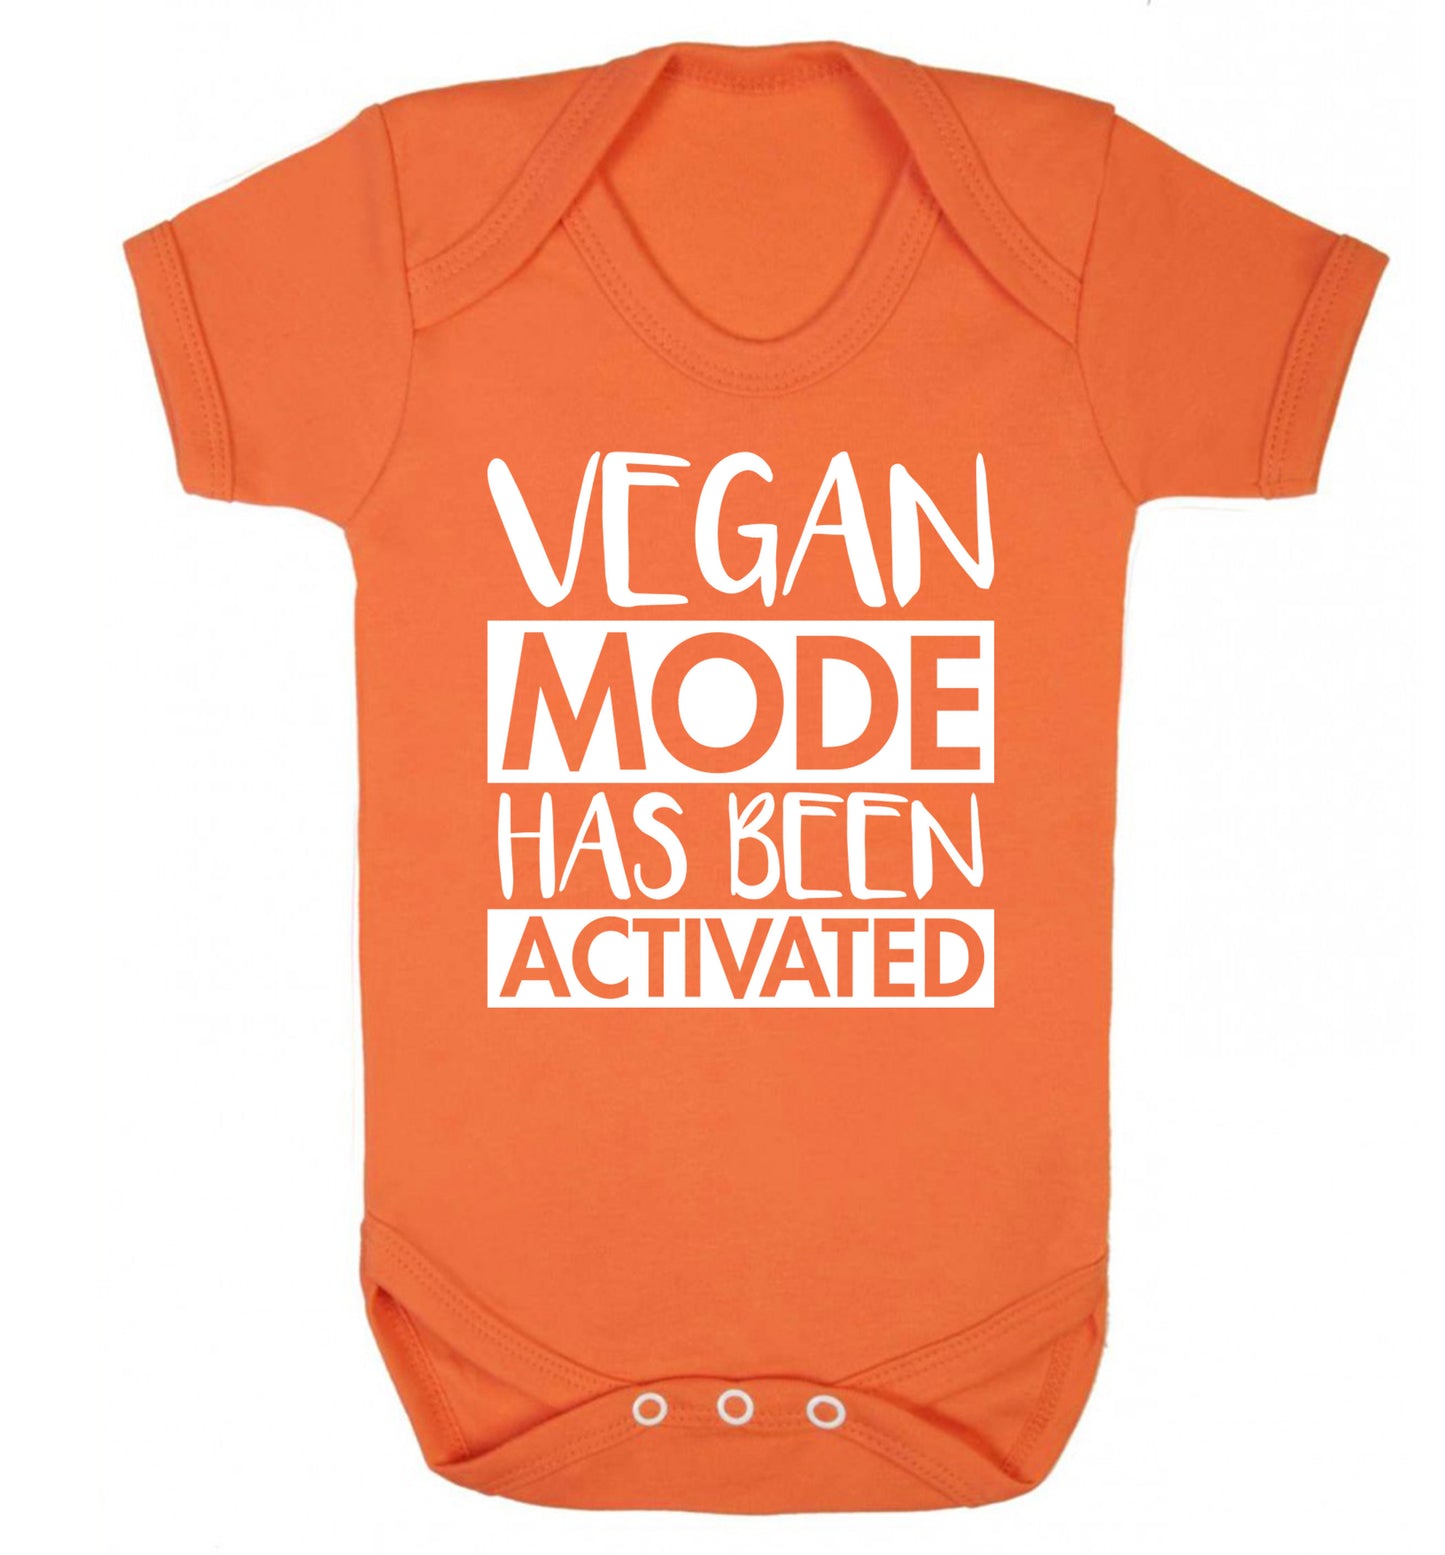 Vegan mode activated Baby Vest orange 18-24 months